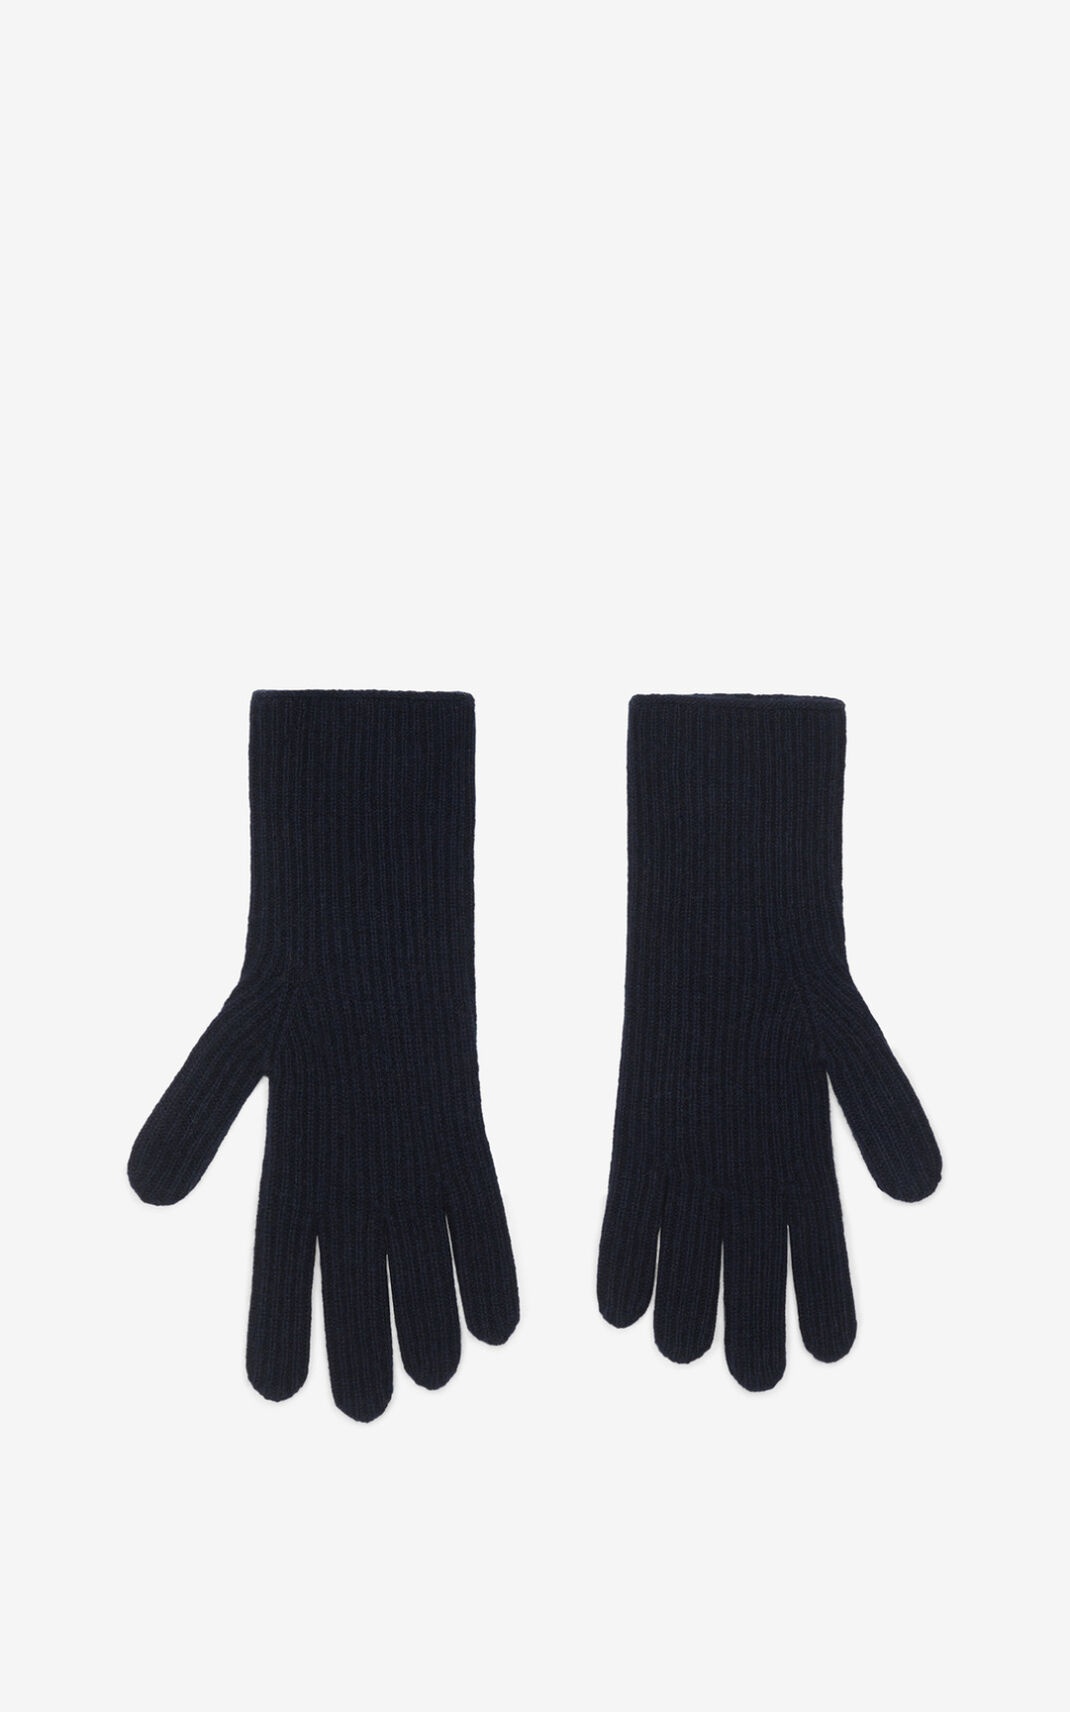 Tiger Crest wool gloves - 2